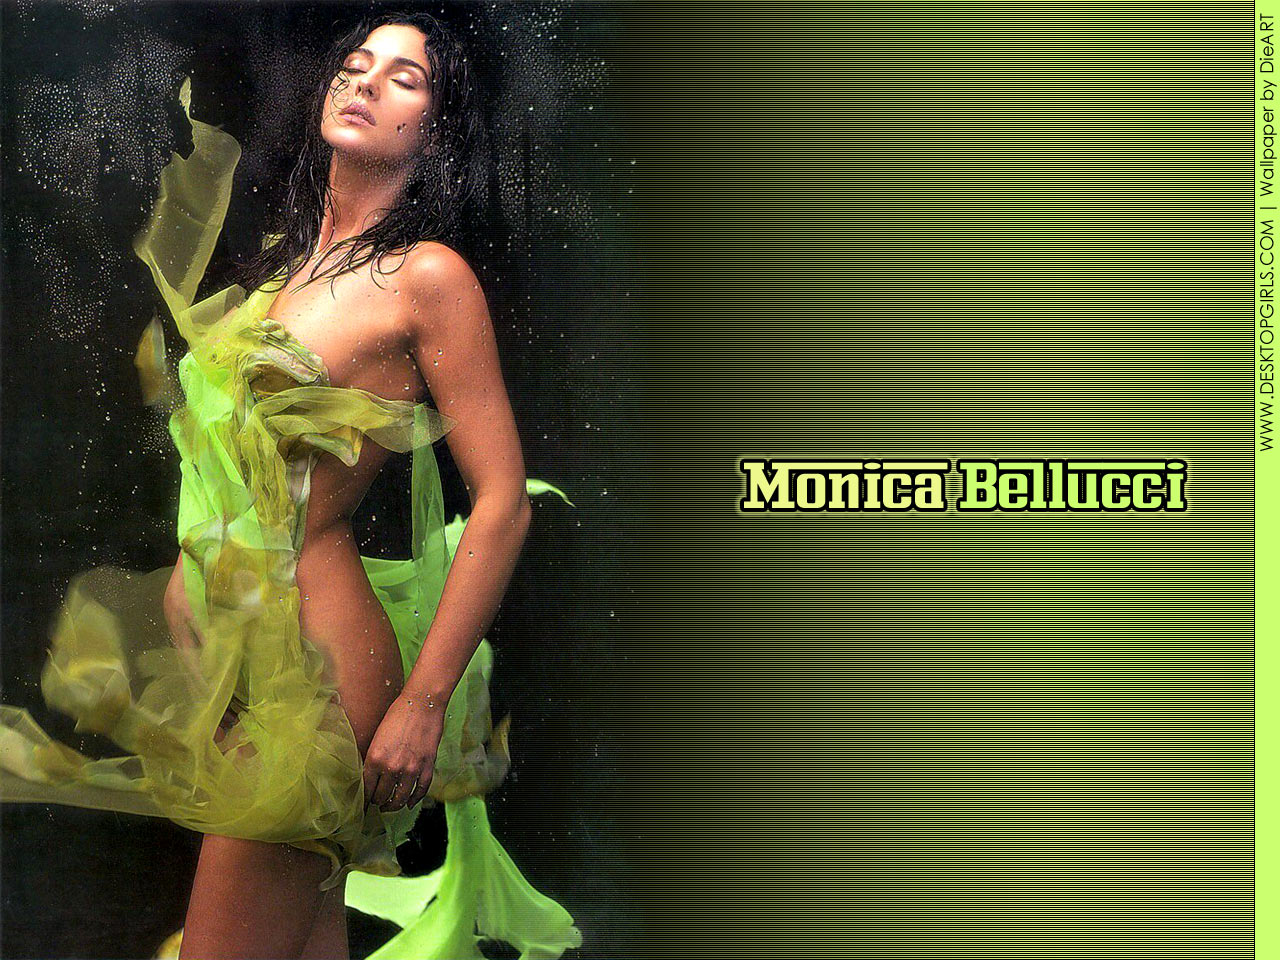 Monica Bellucci Wallpaper Desktop Hot